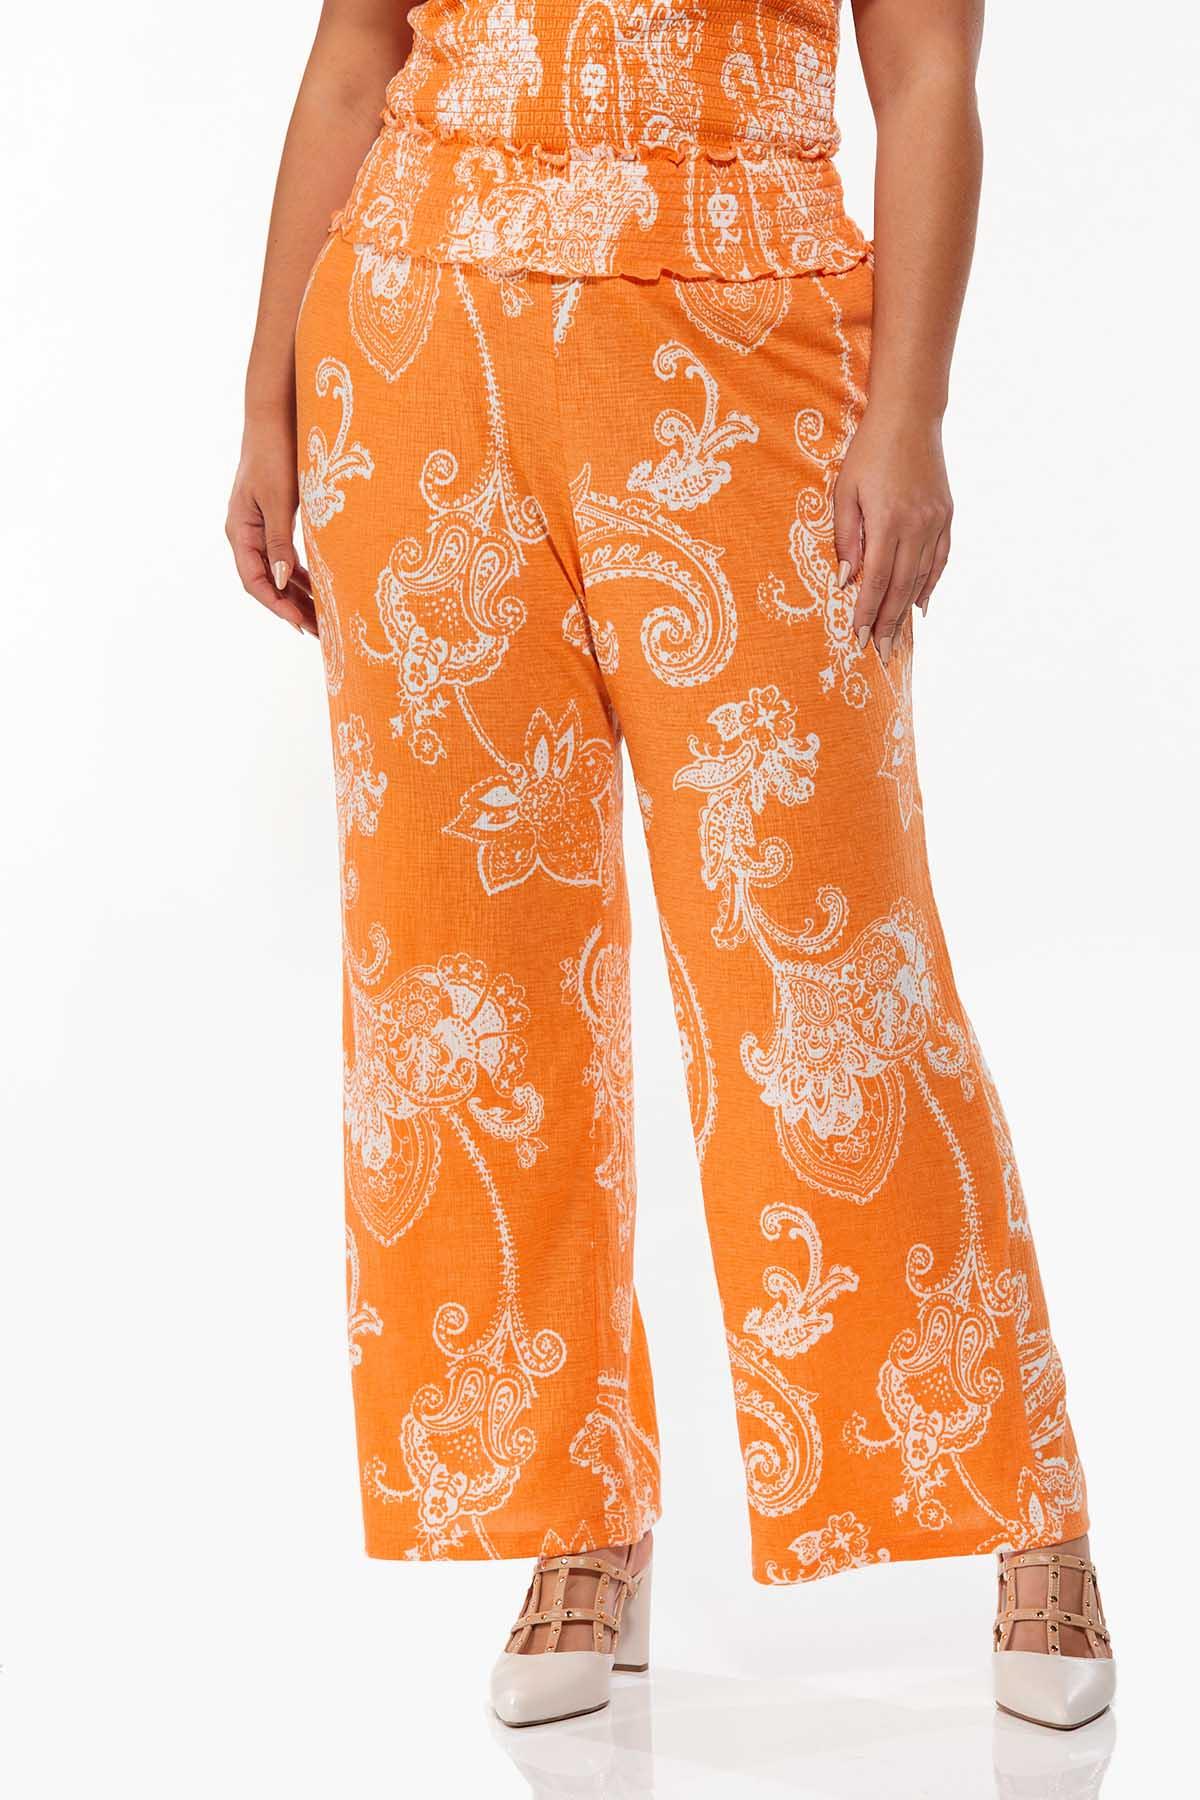 Plus Petite Tangerine Floral Pants